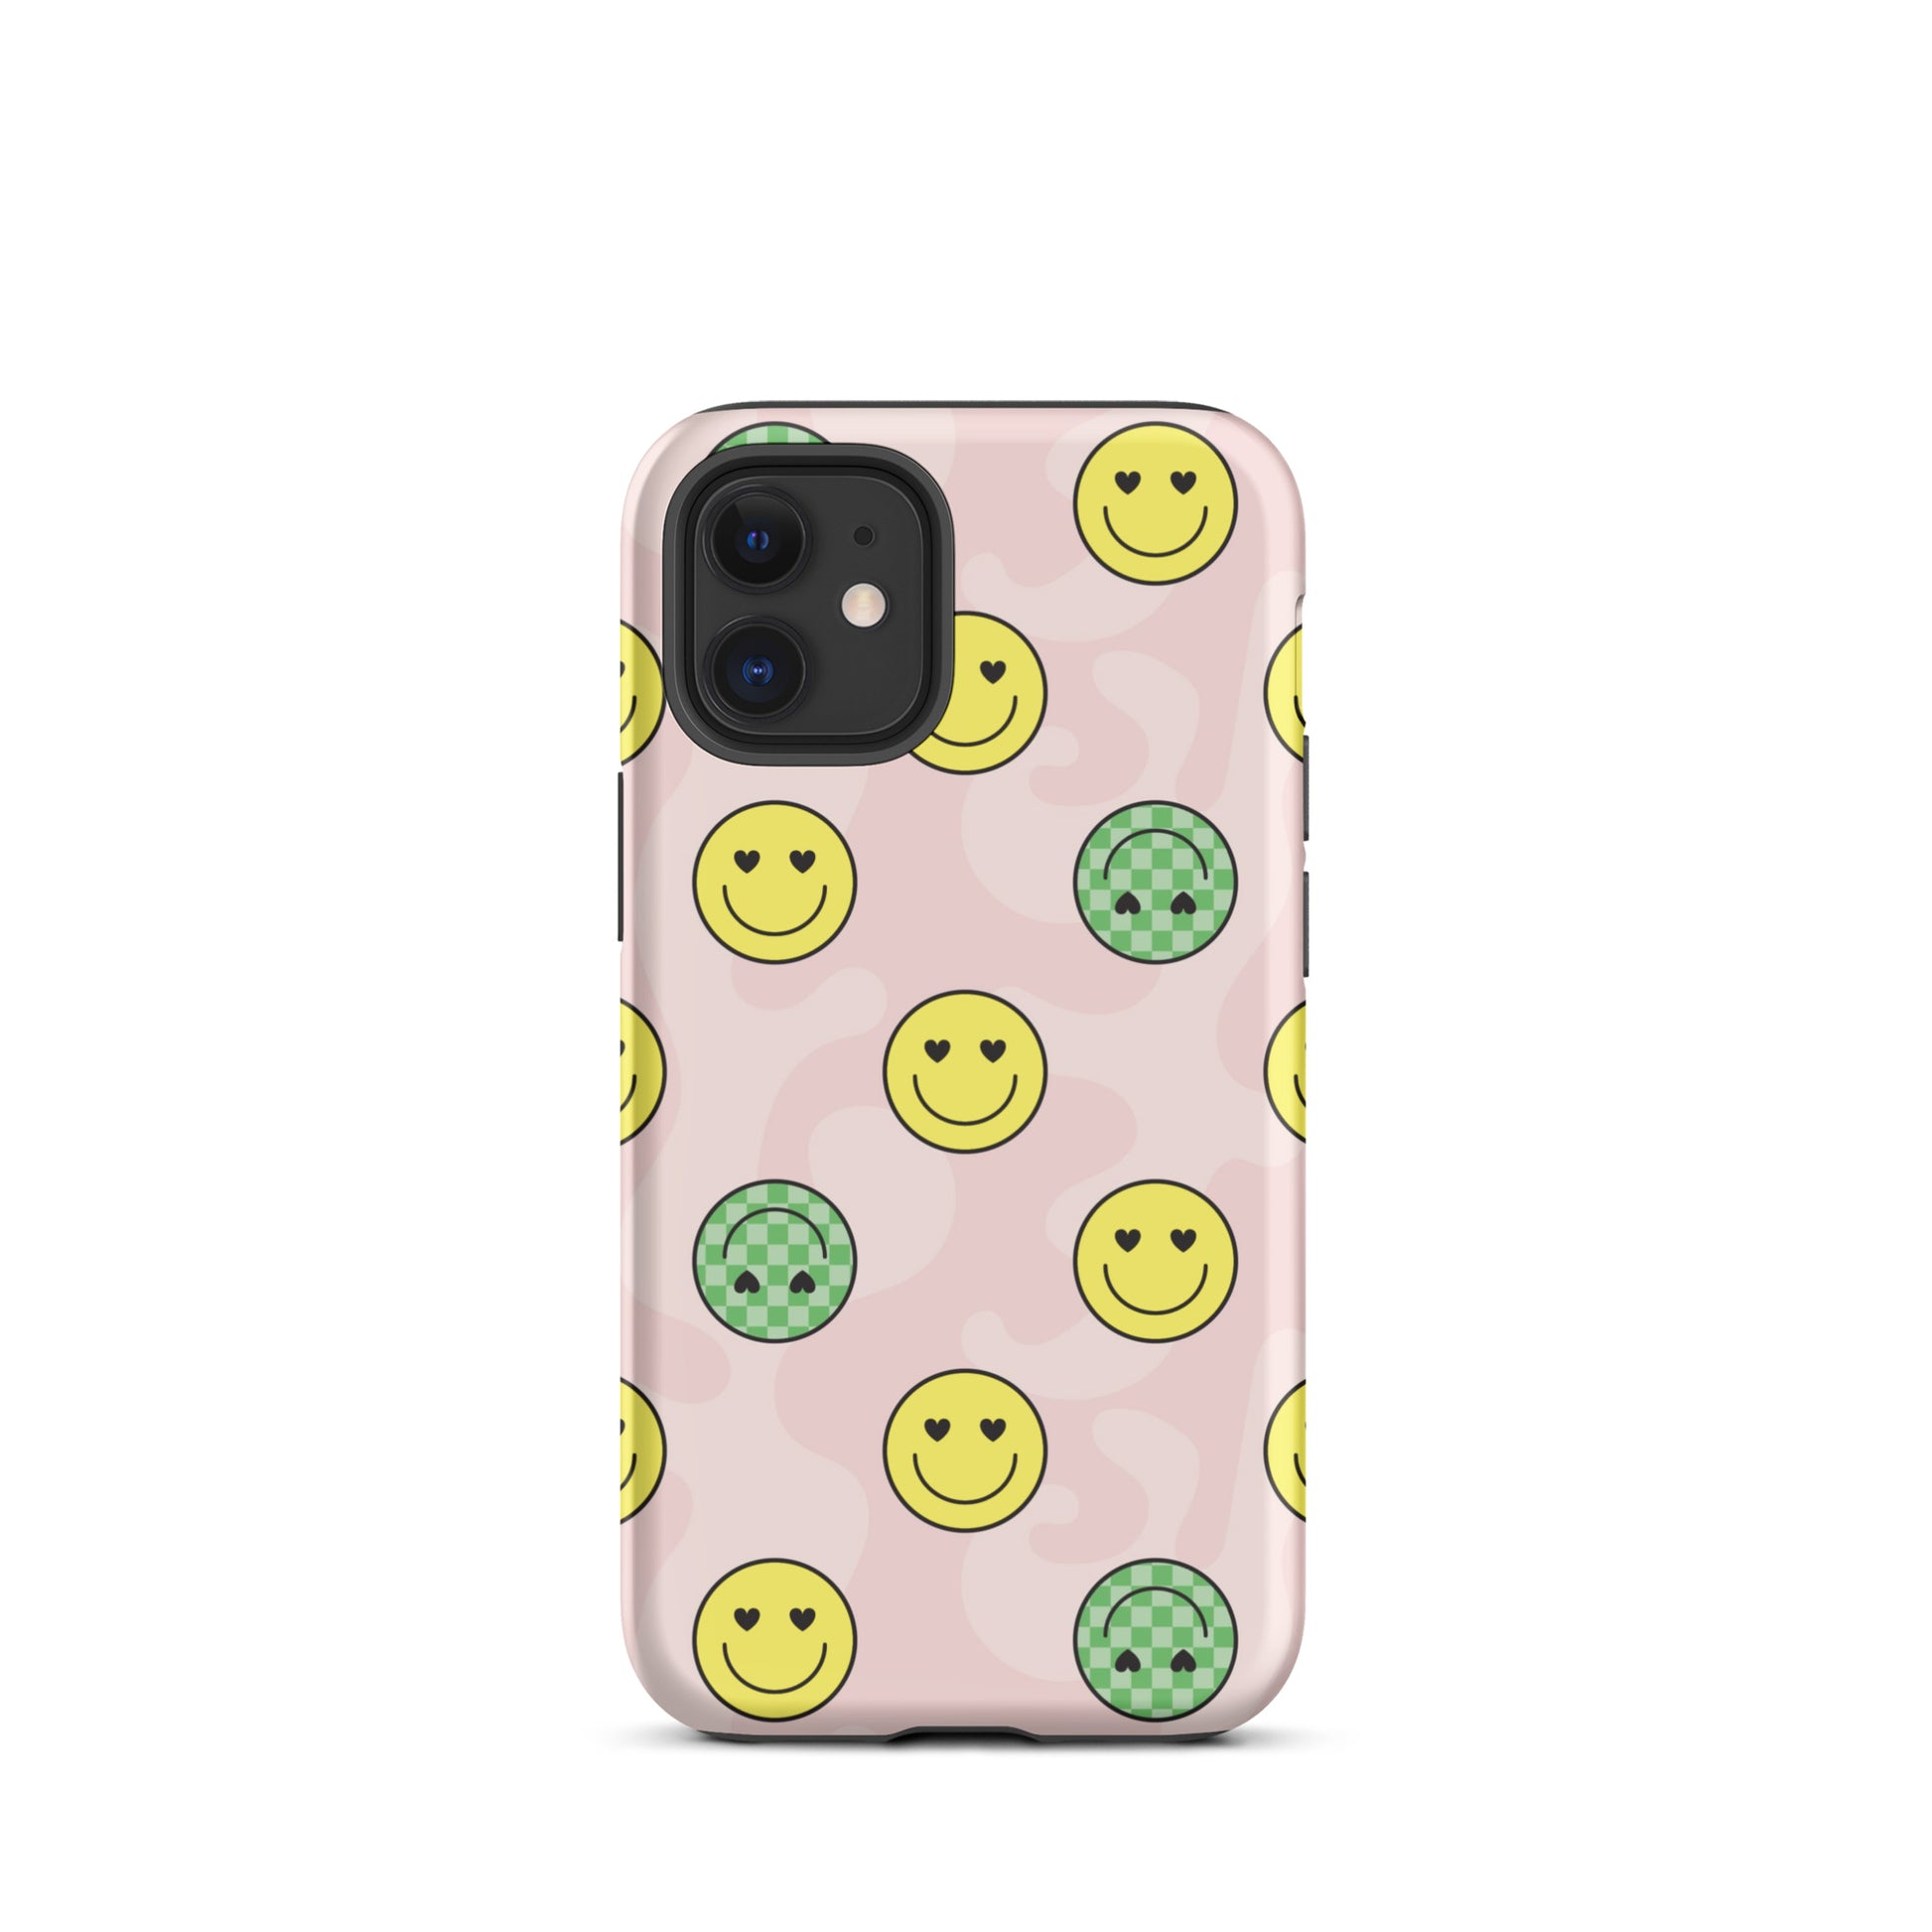 Preppy Smiley Faces iPhone Case iPhone 12 mini Matte